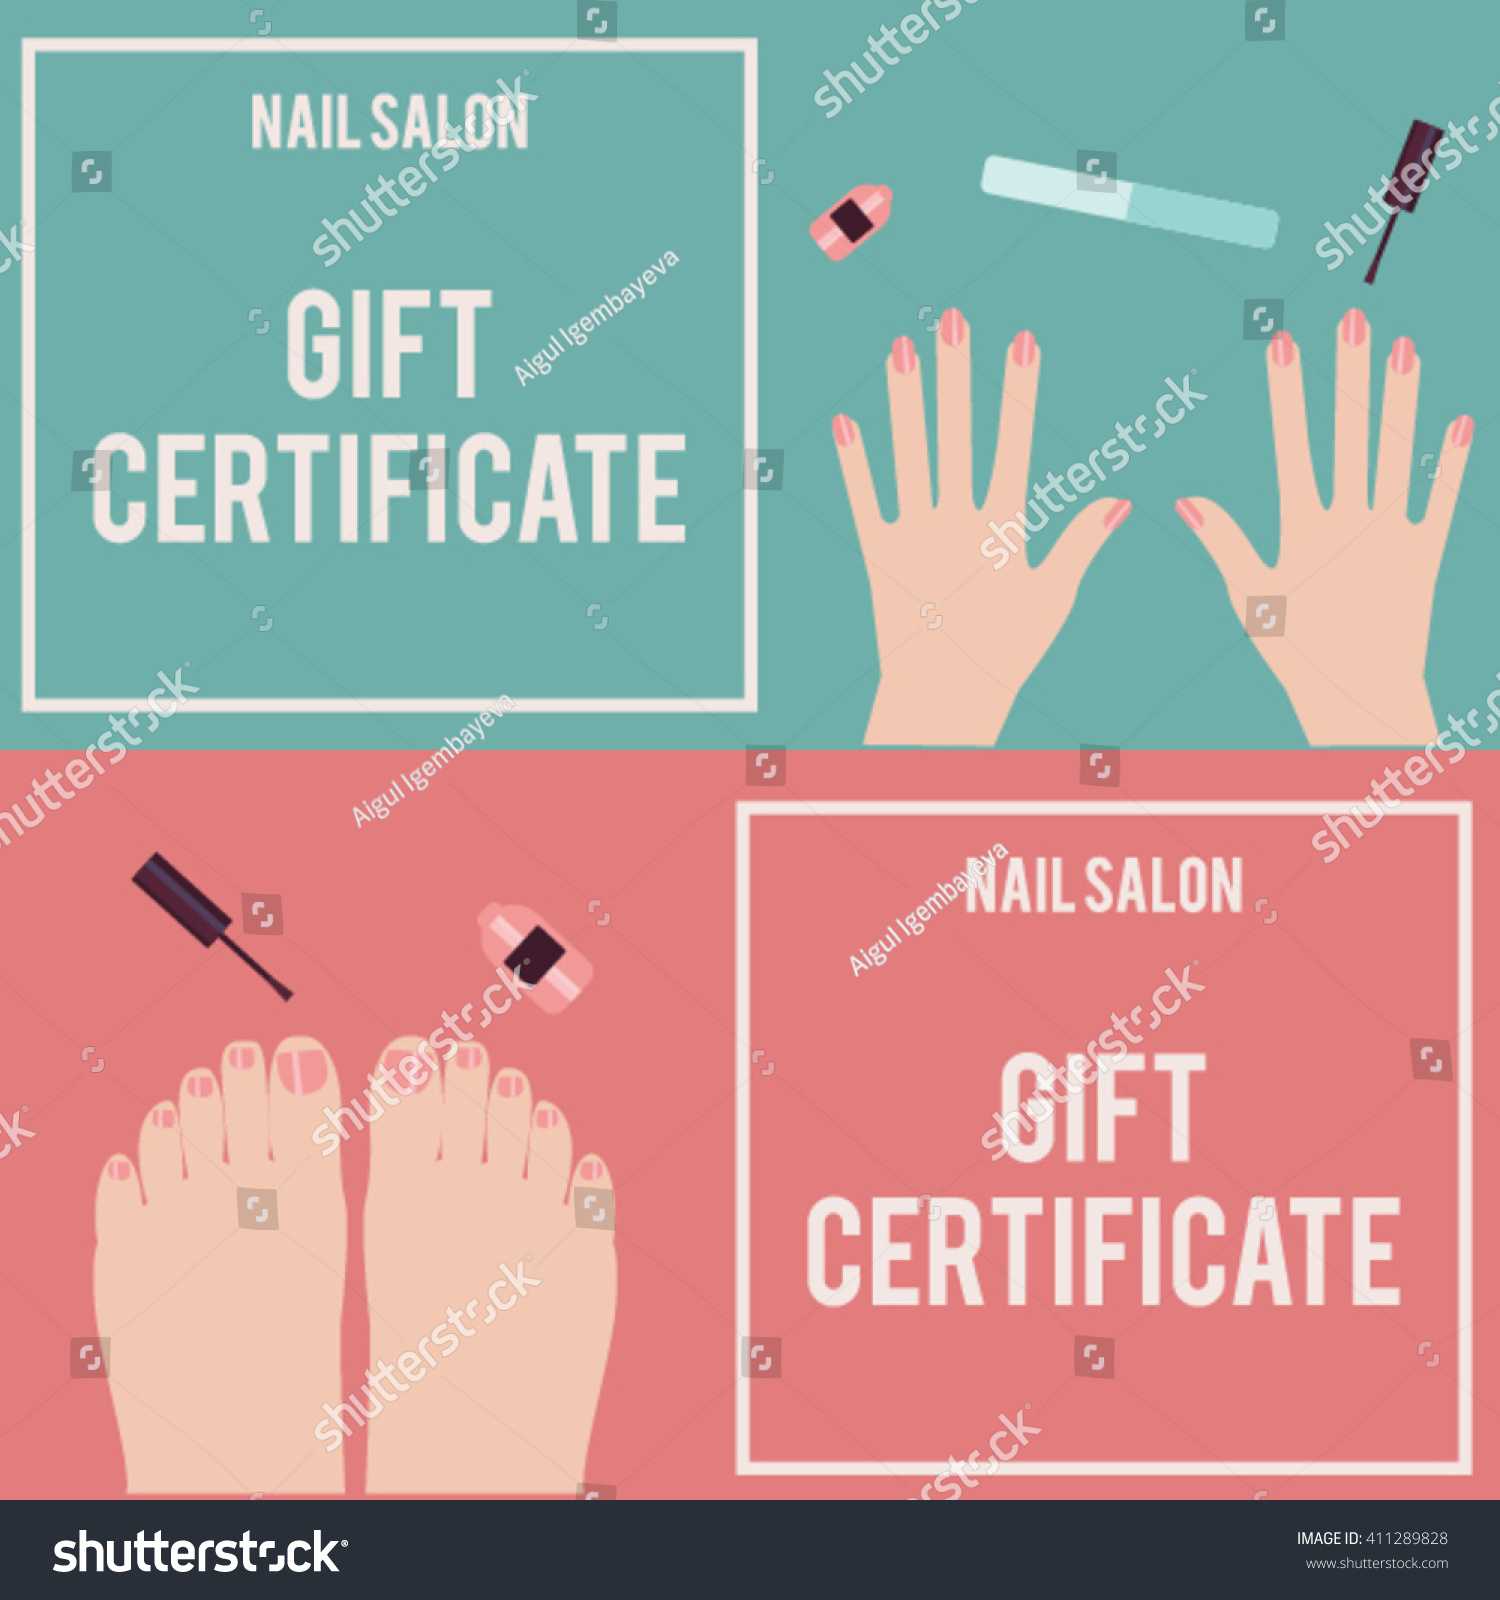 Nail Salon Gift Certificate Gift Certificate Stock Image With Nail Gift Certificate Template Free